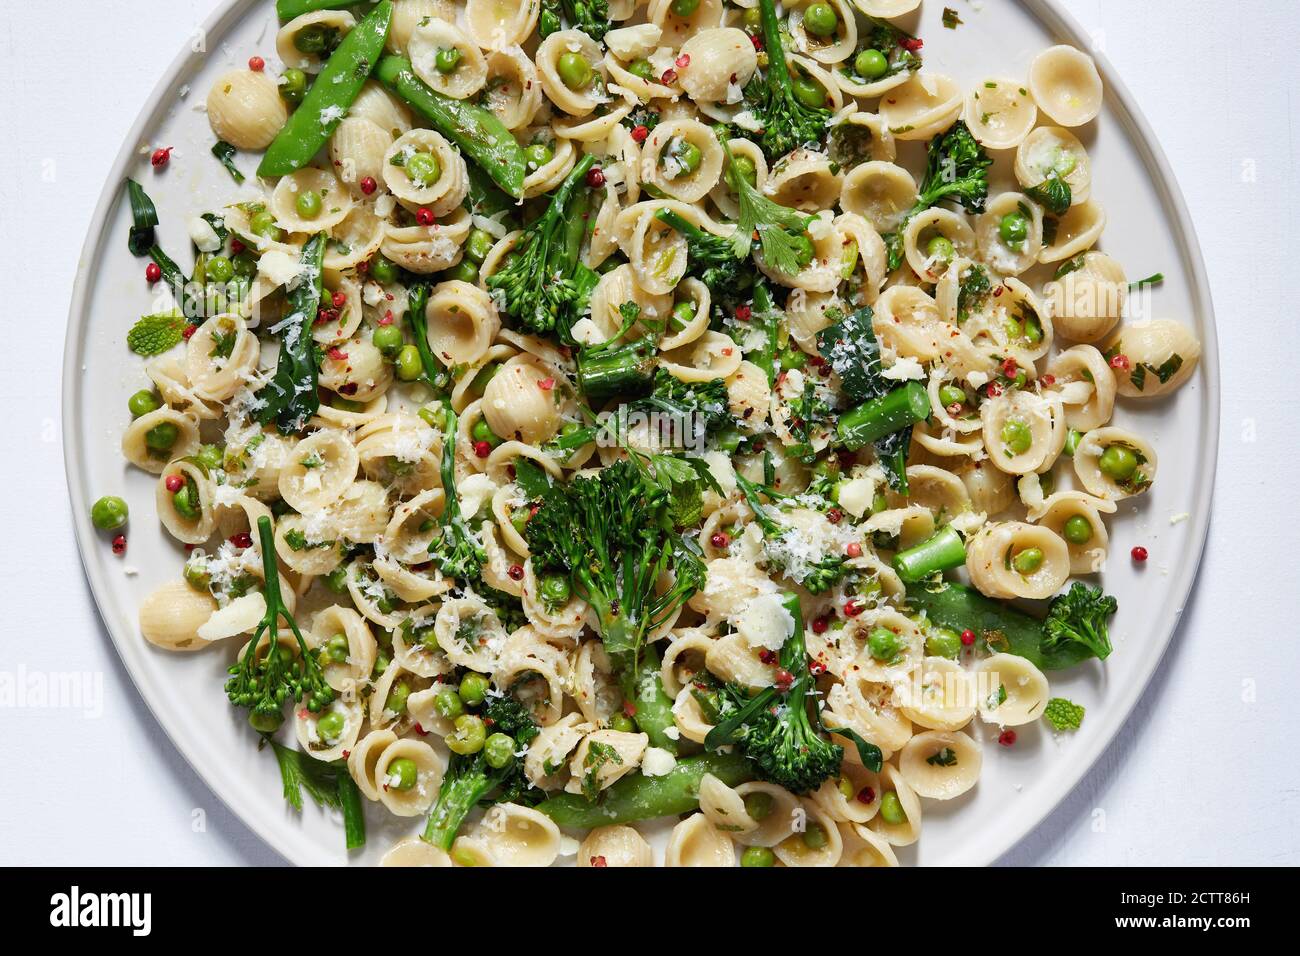 Orecchiette with broccoli and peas on plate Stock Photo